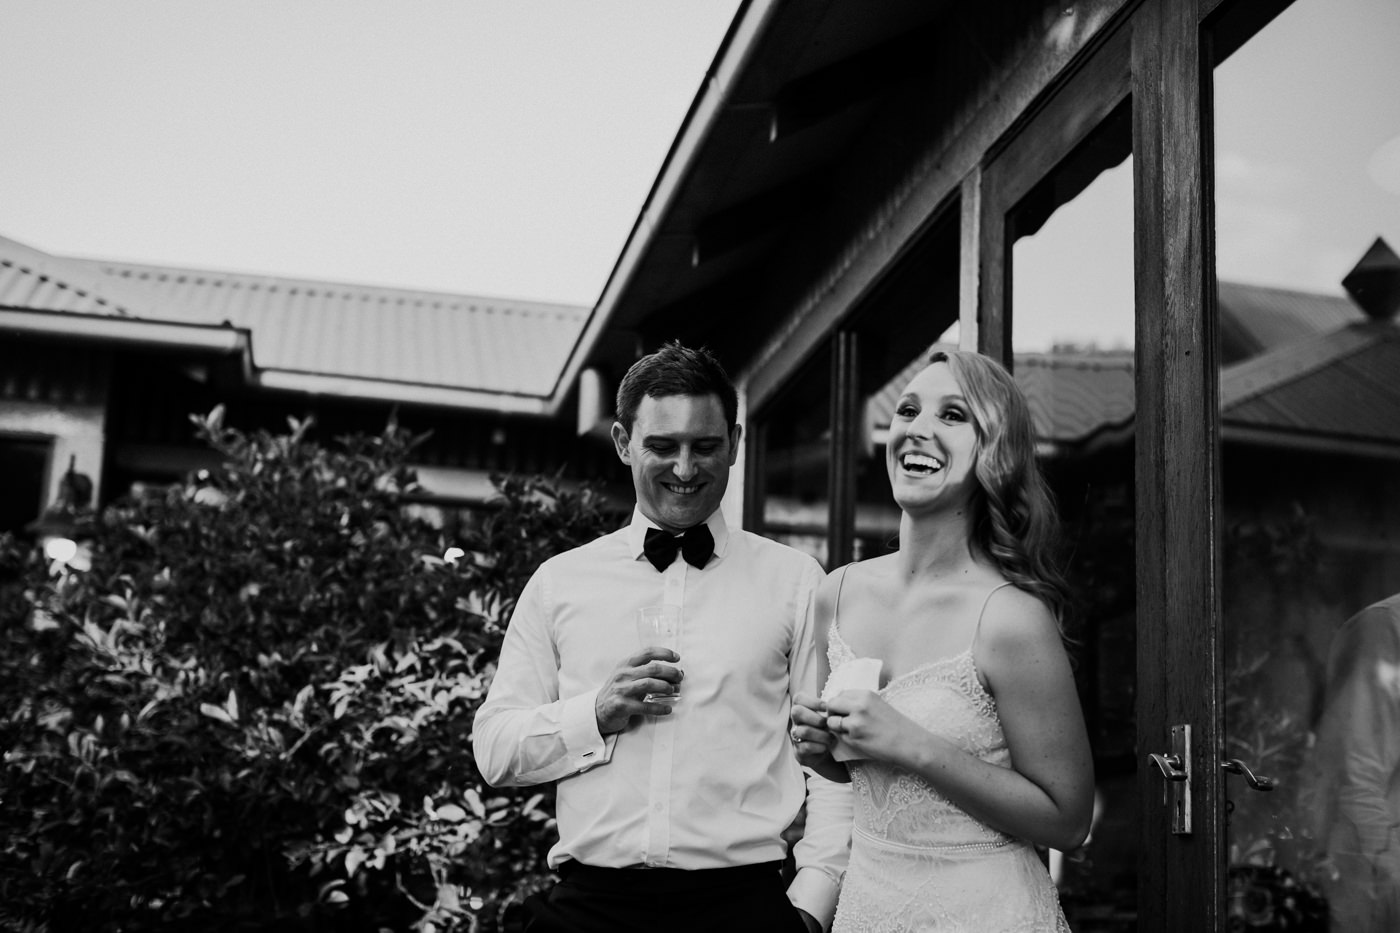 Anthony & Eliet - Wagga Wagga Wedding - Country NSW - Samantha Heather Photography-144.jpg